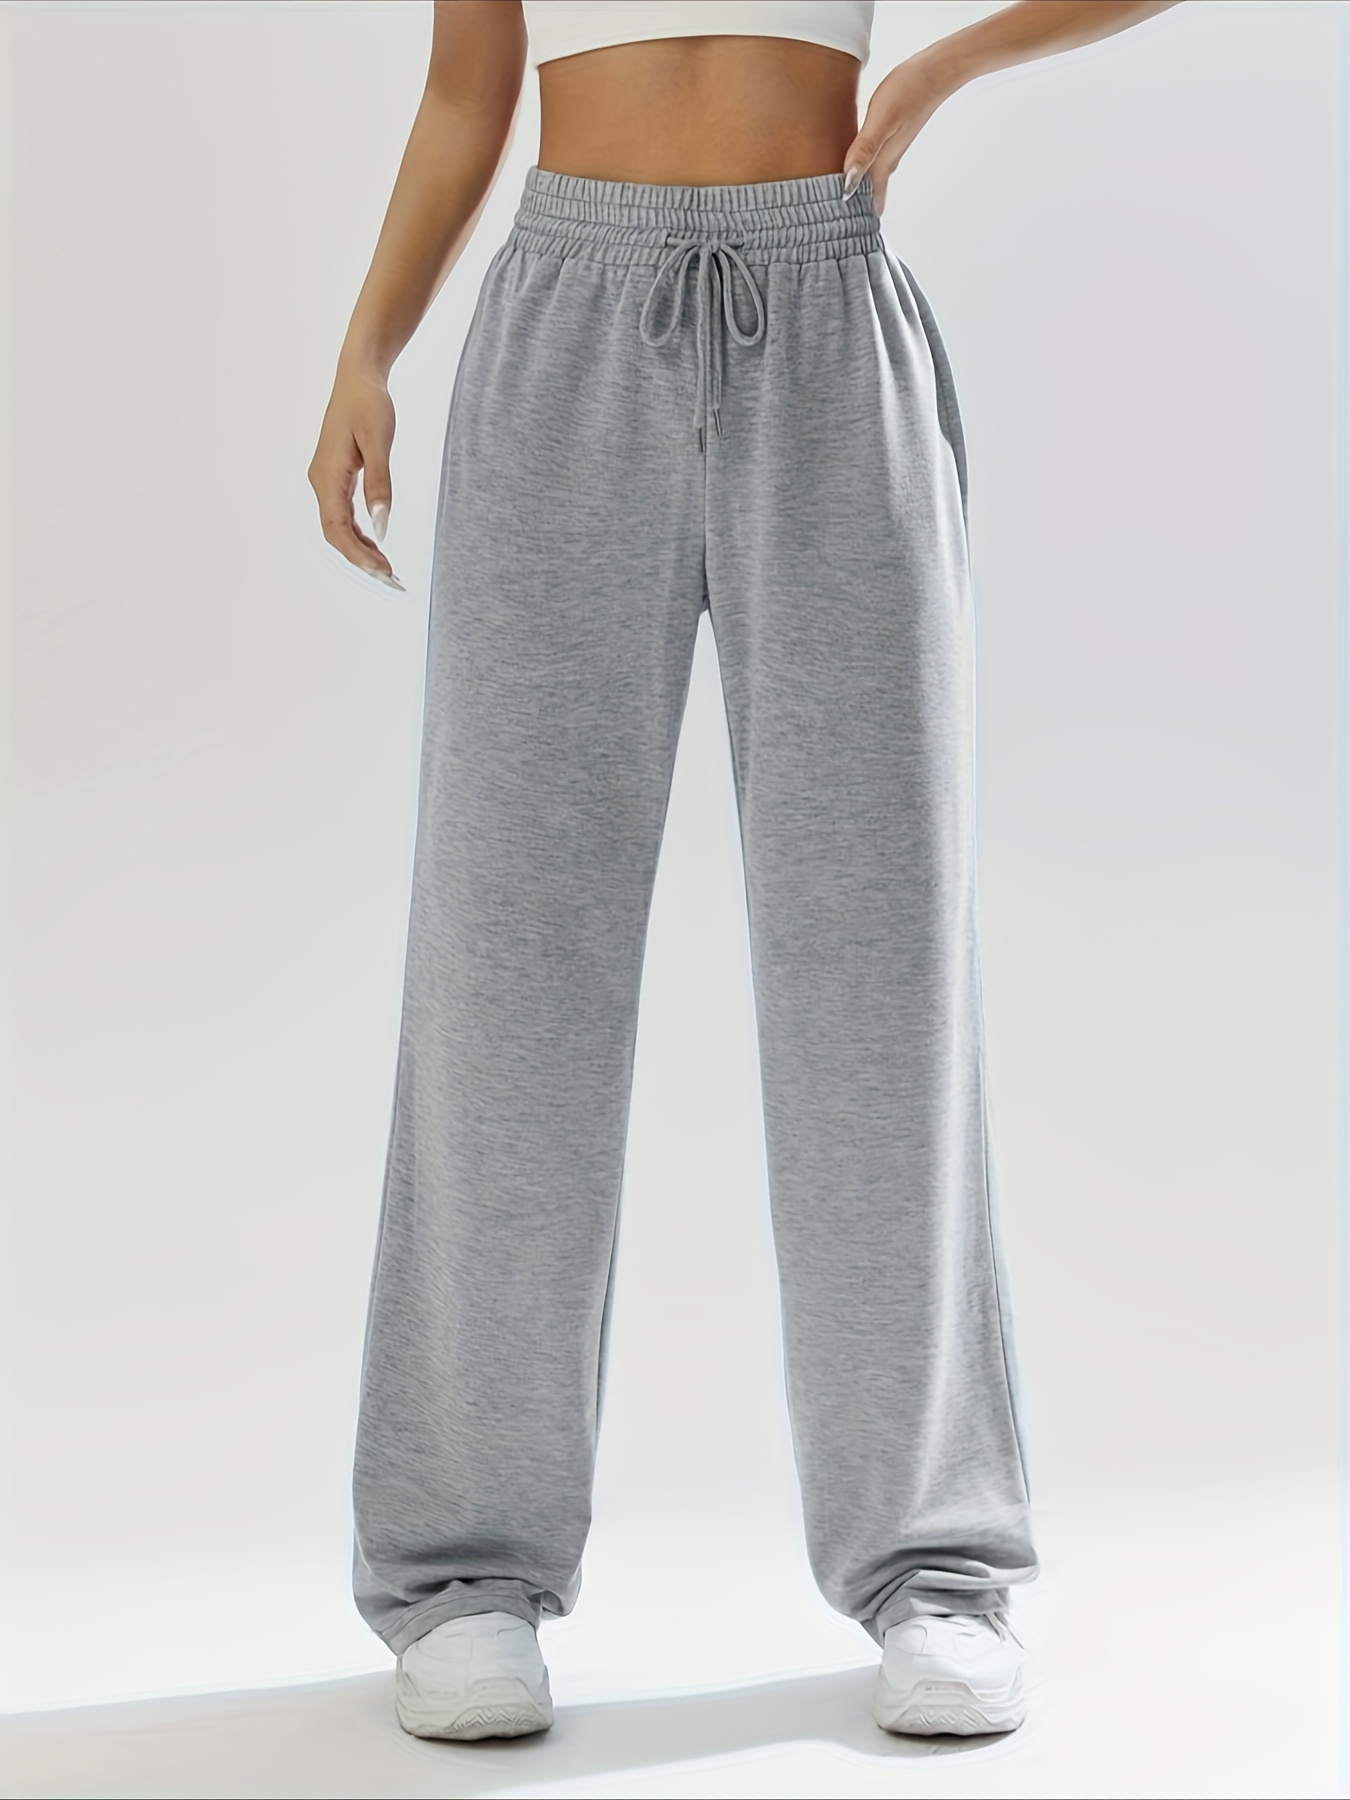  Jeans for Women Women's Pants Slant Pocket Jogger Jeans SUANQ  (Color : Light Grey, Size : Large) : Clothing, Shoes & Jewelry